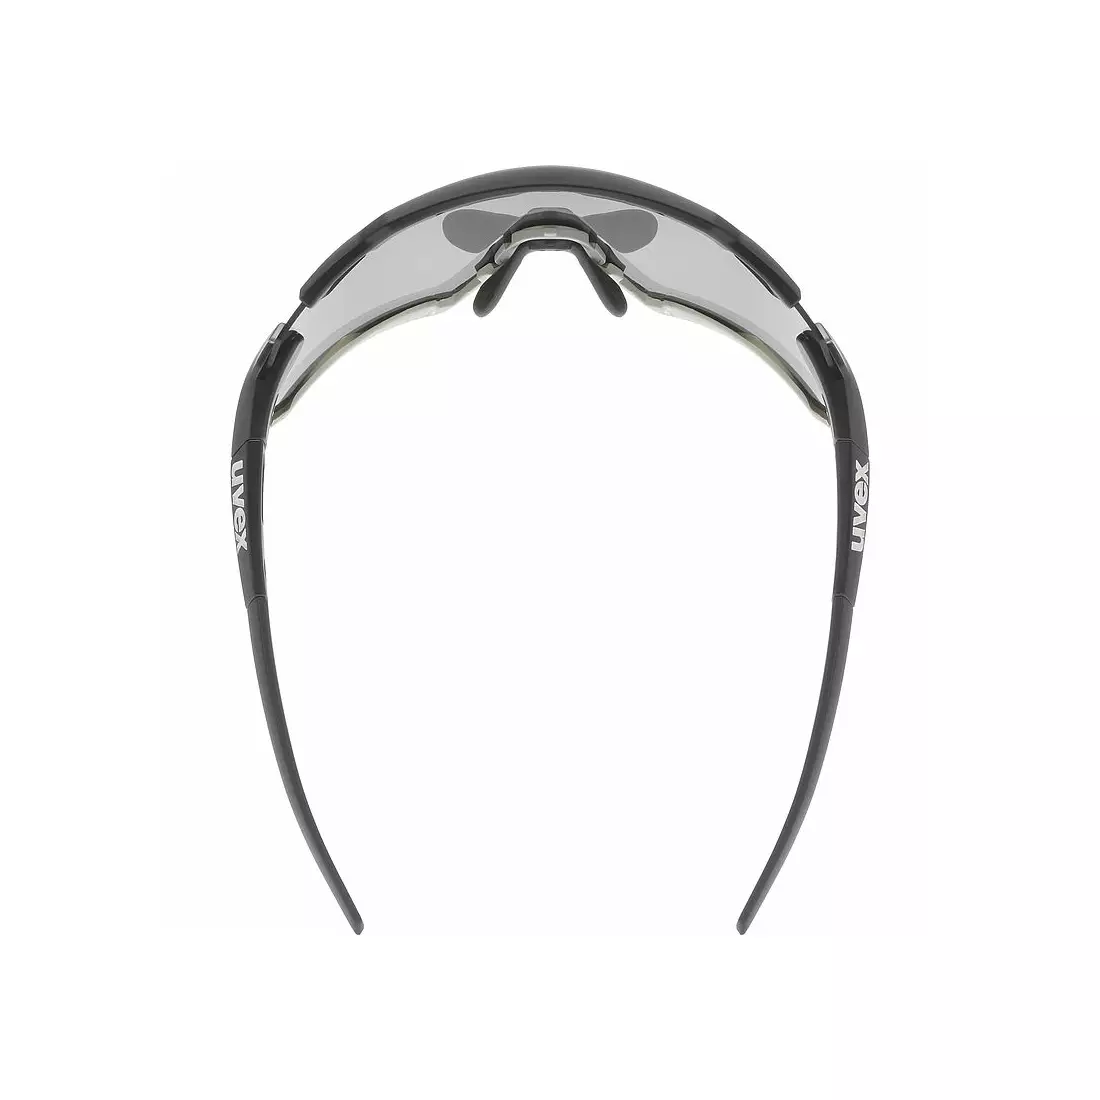 Sportovní brýle UVEX Sportstyle 228 mirror silver (S3), černo-šedé